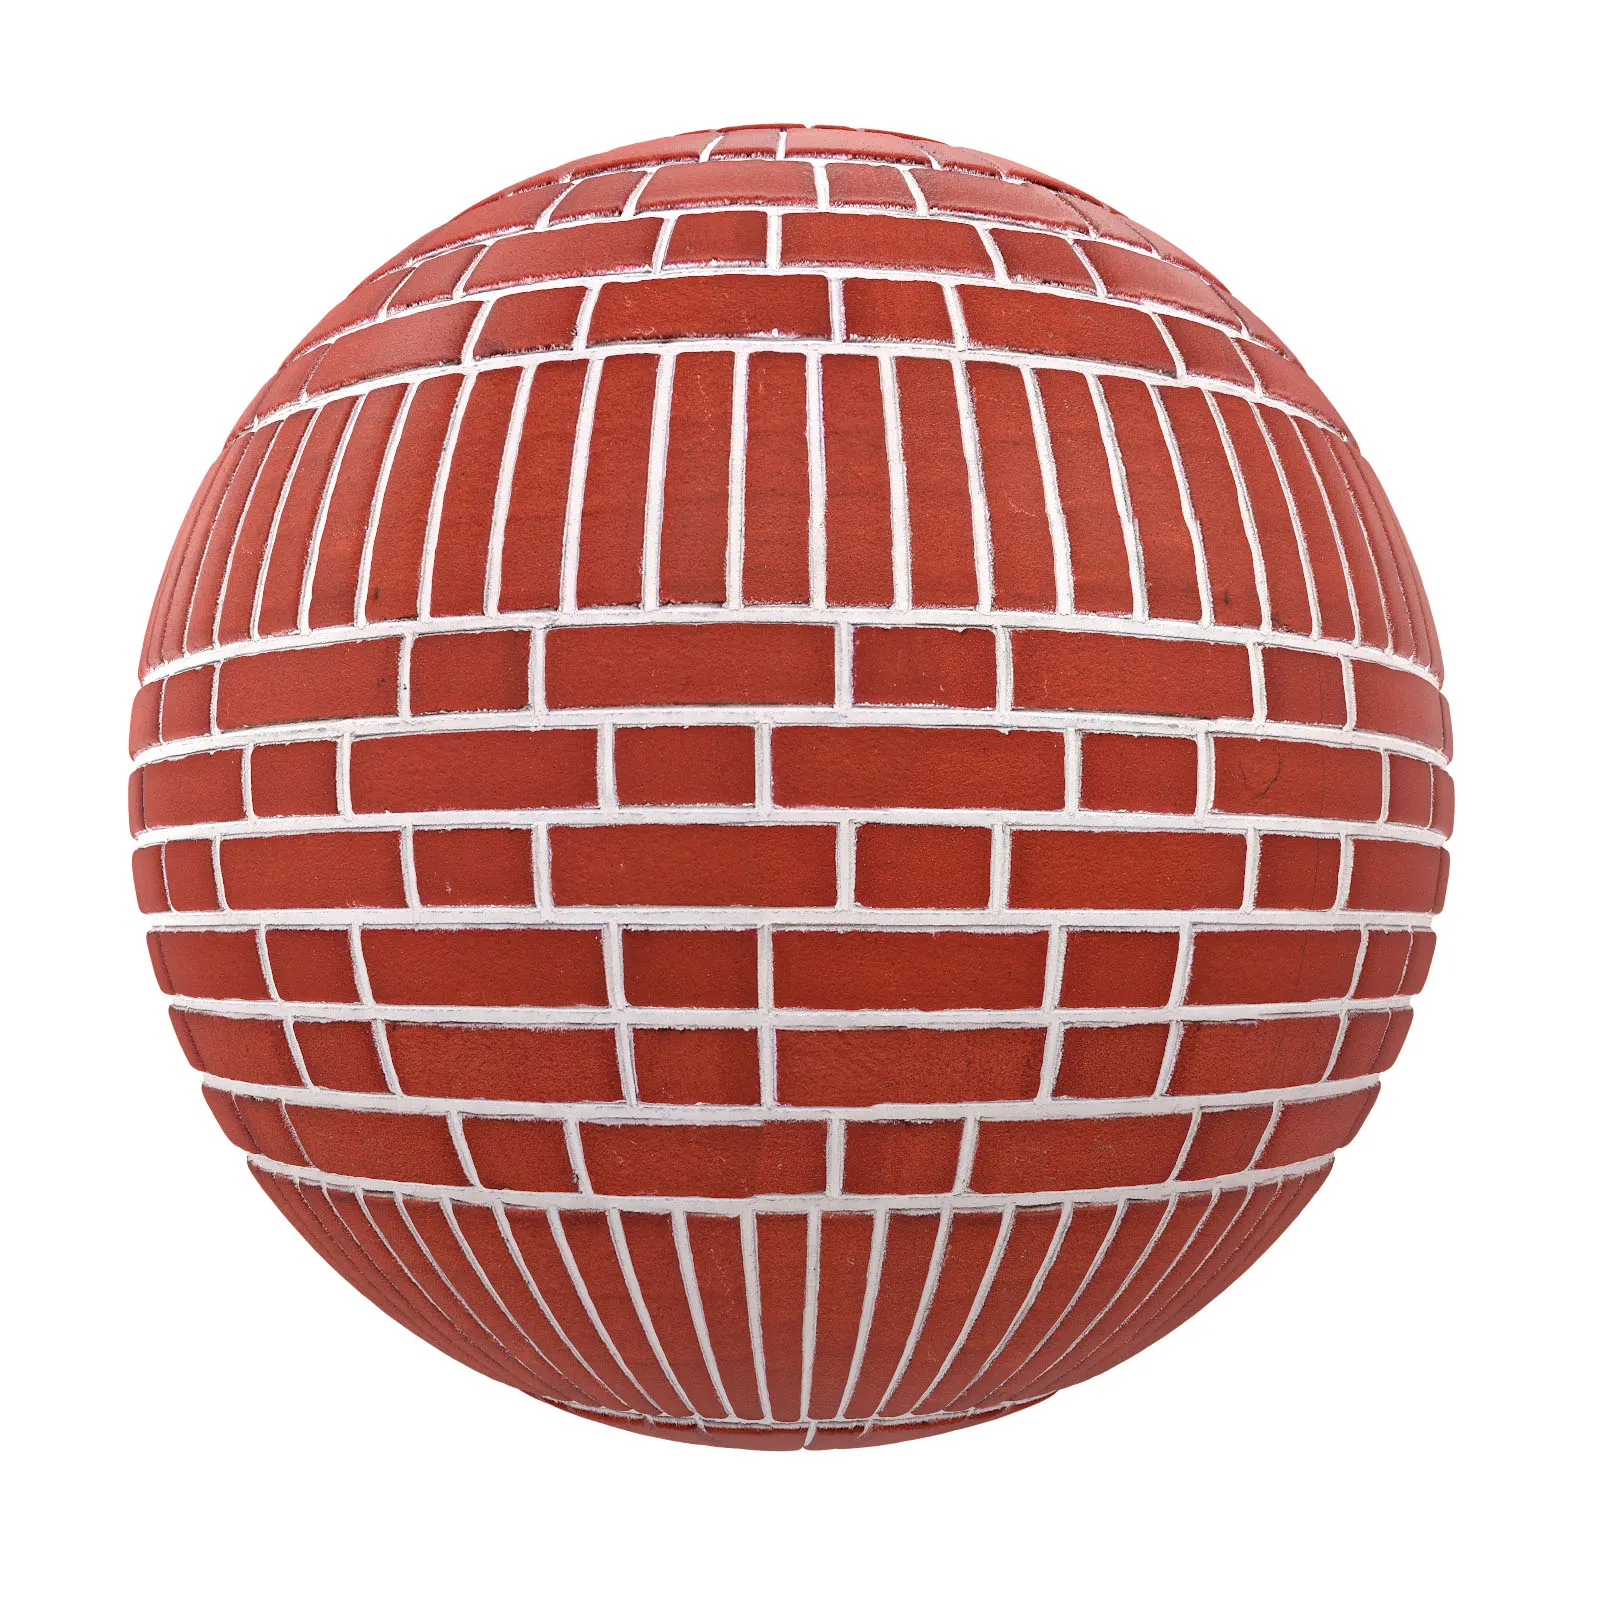 PBR CGAXIS TEXTURES – BRICK – Red Brick Wall 18